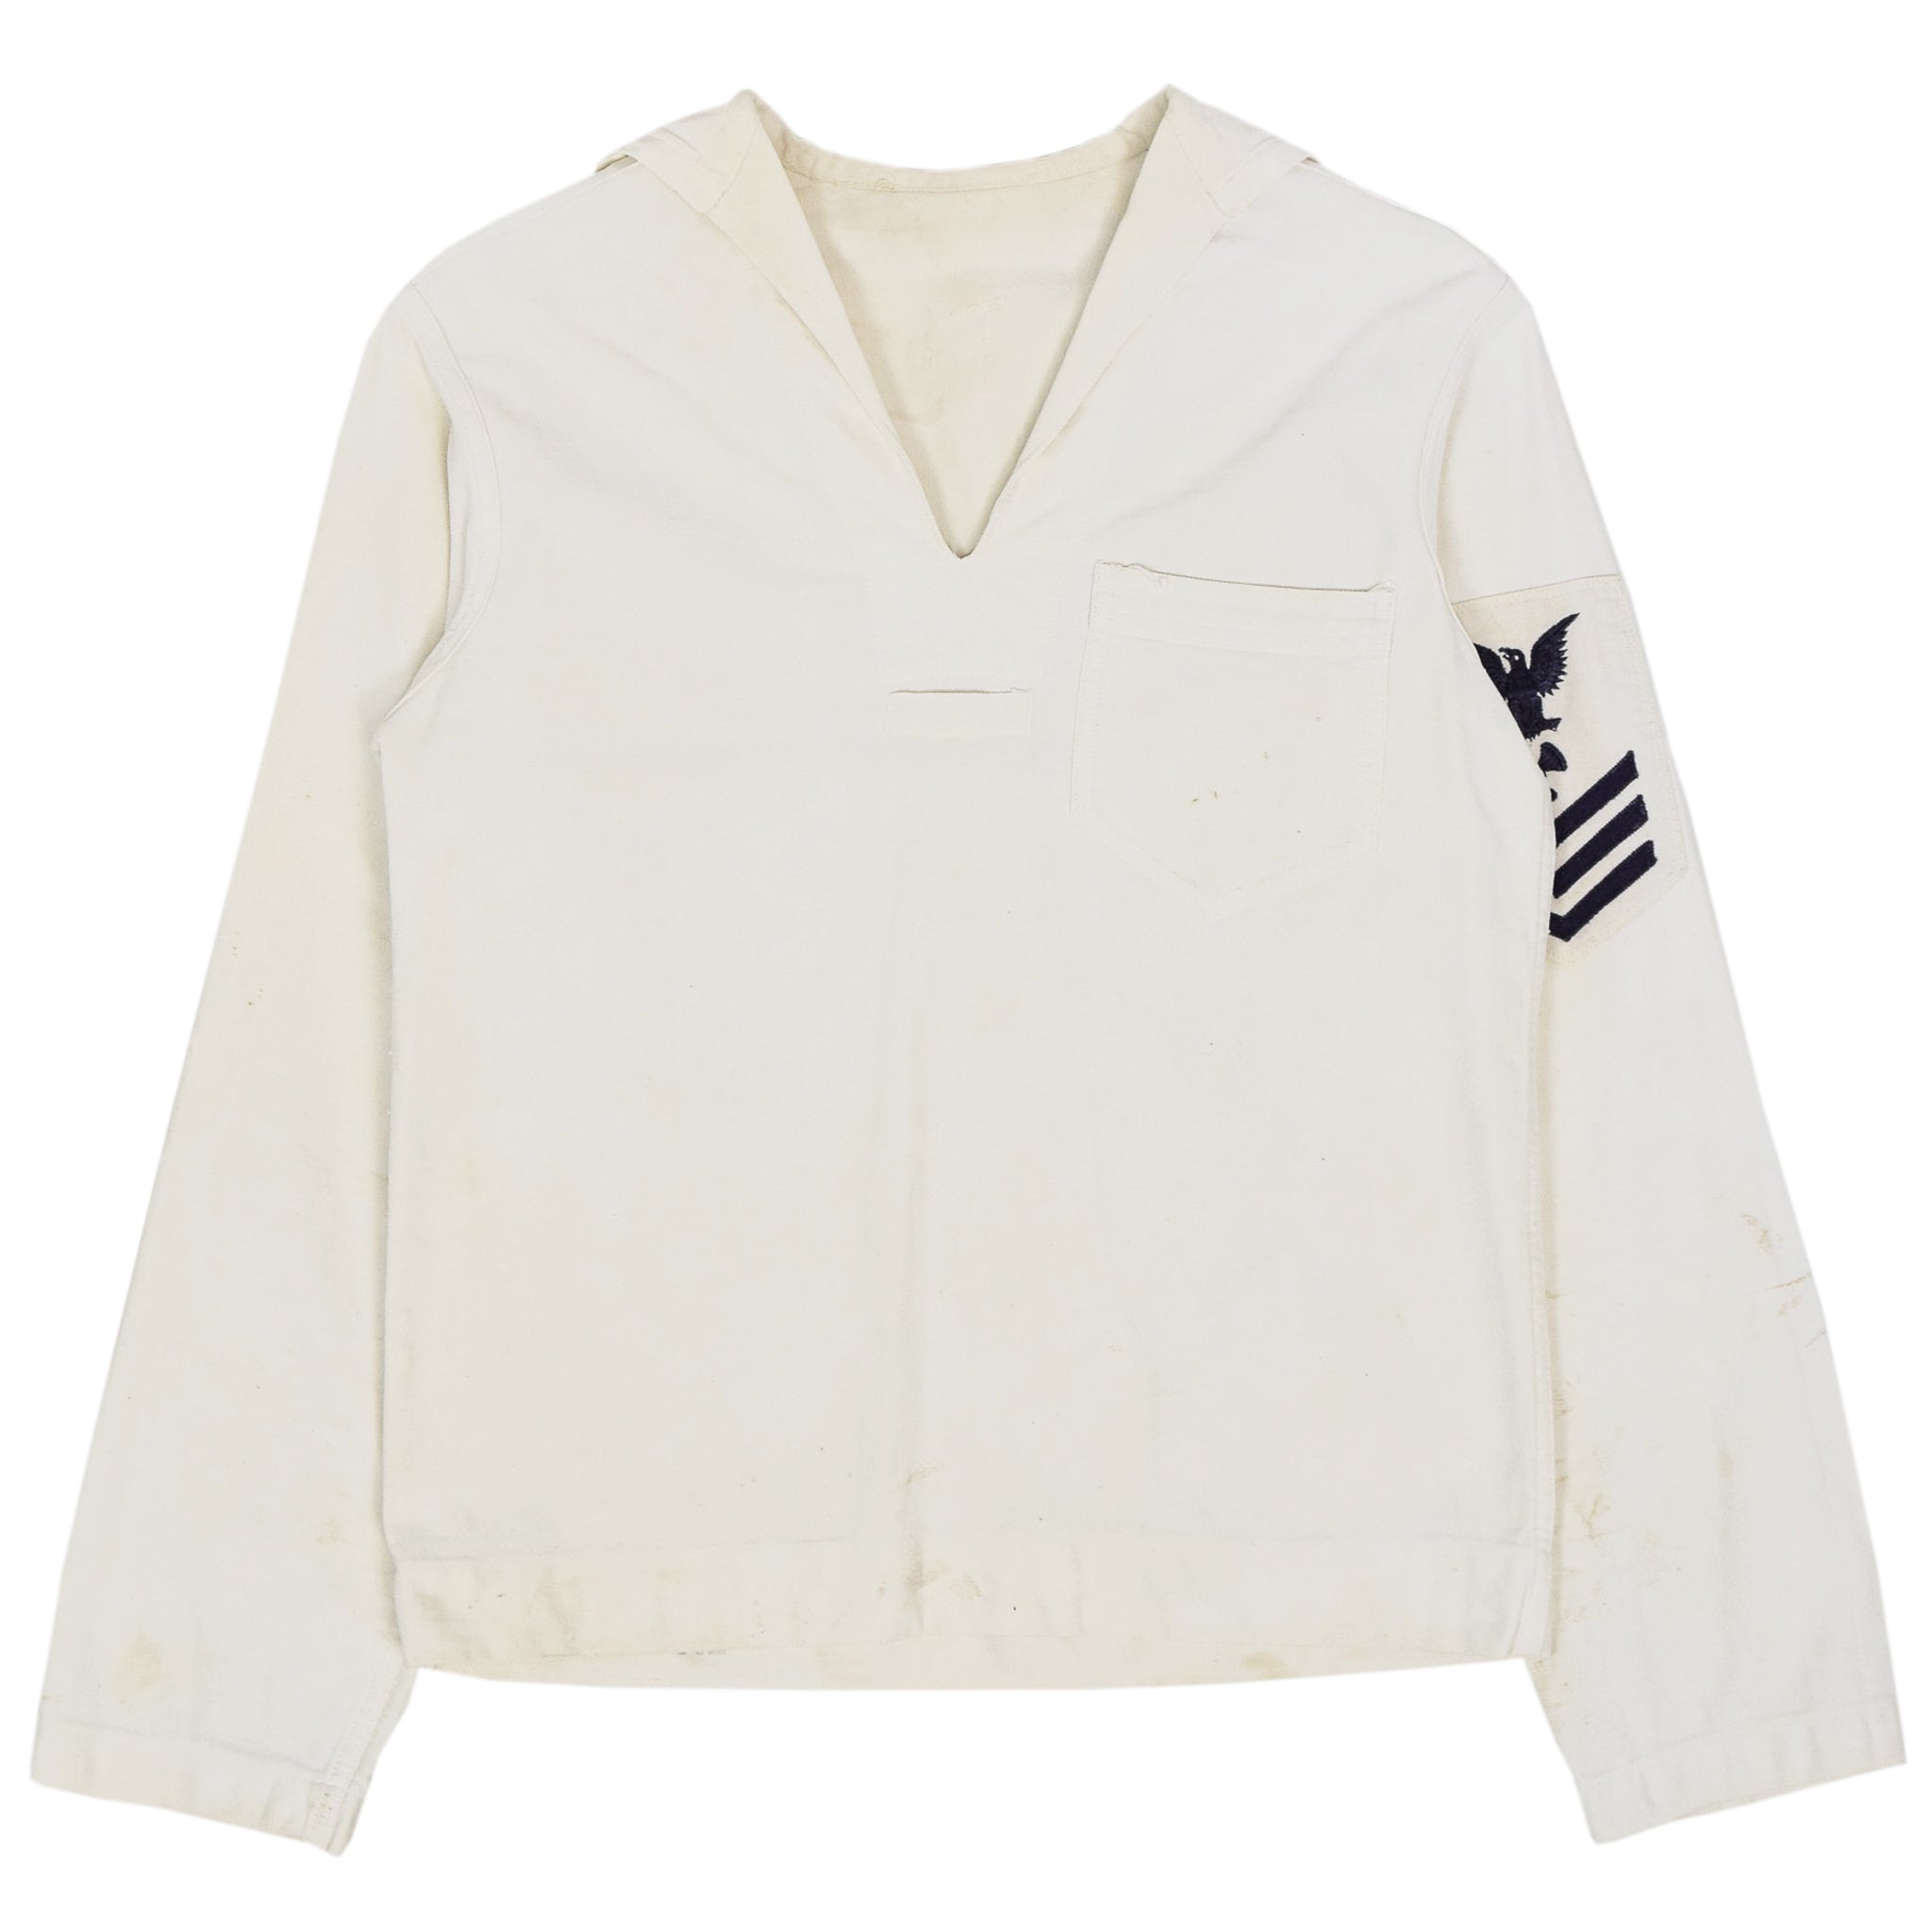 Vintage 40s WWII Era US Navy Cracker Jack Military Dress Uniform Cotton  Shirt XS